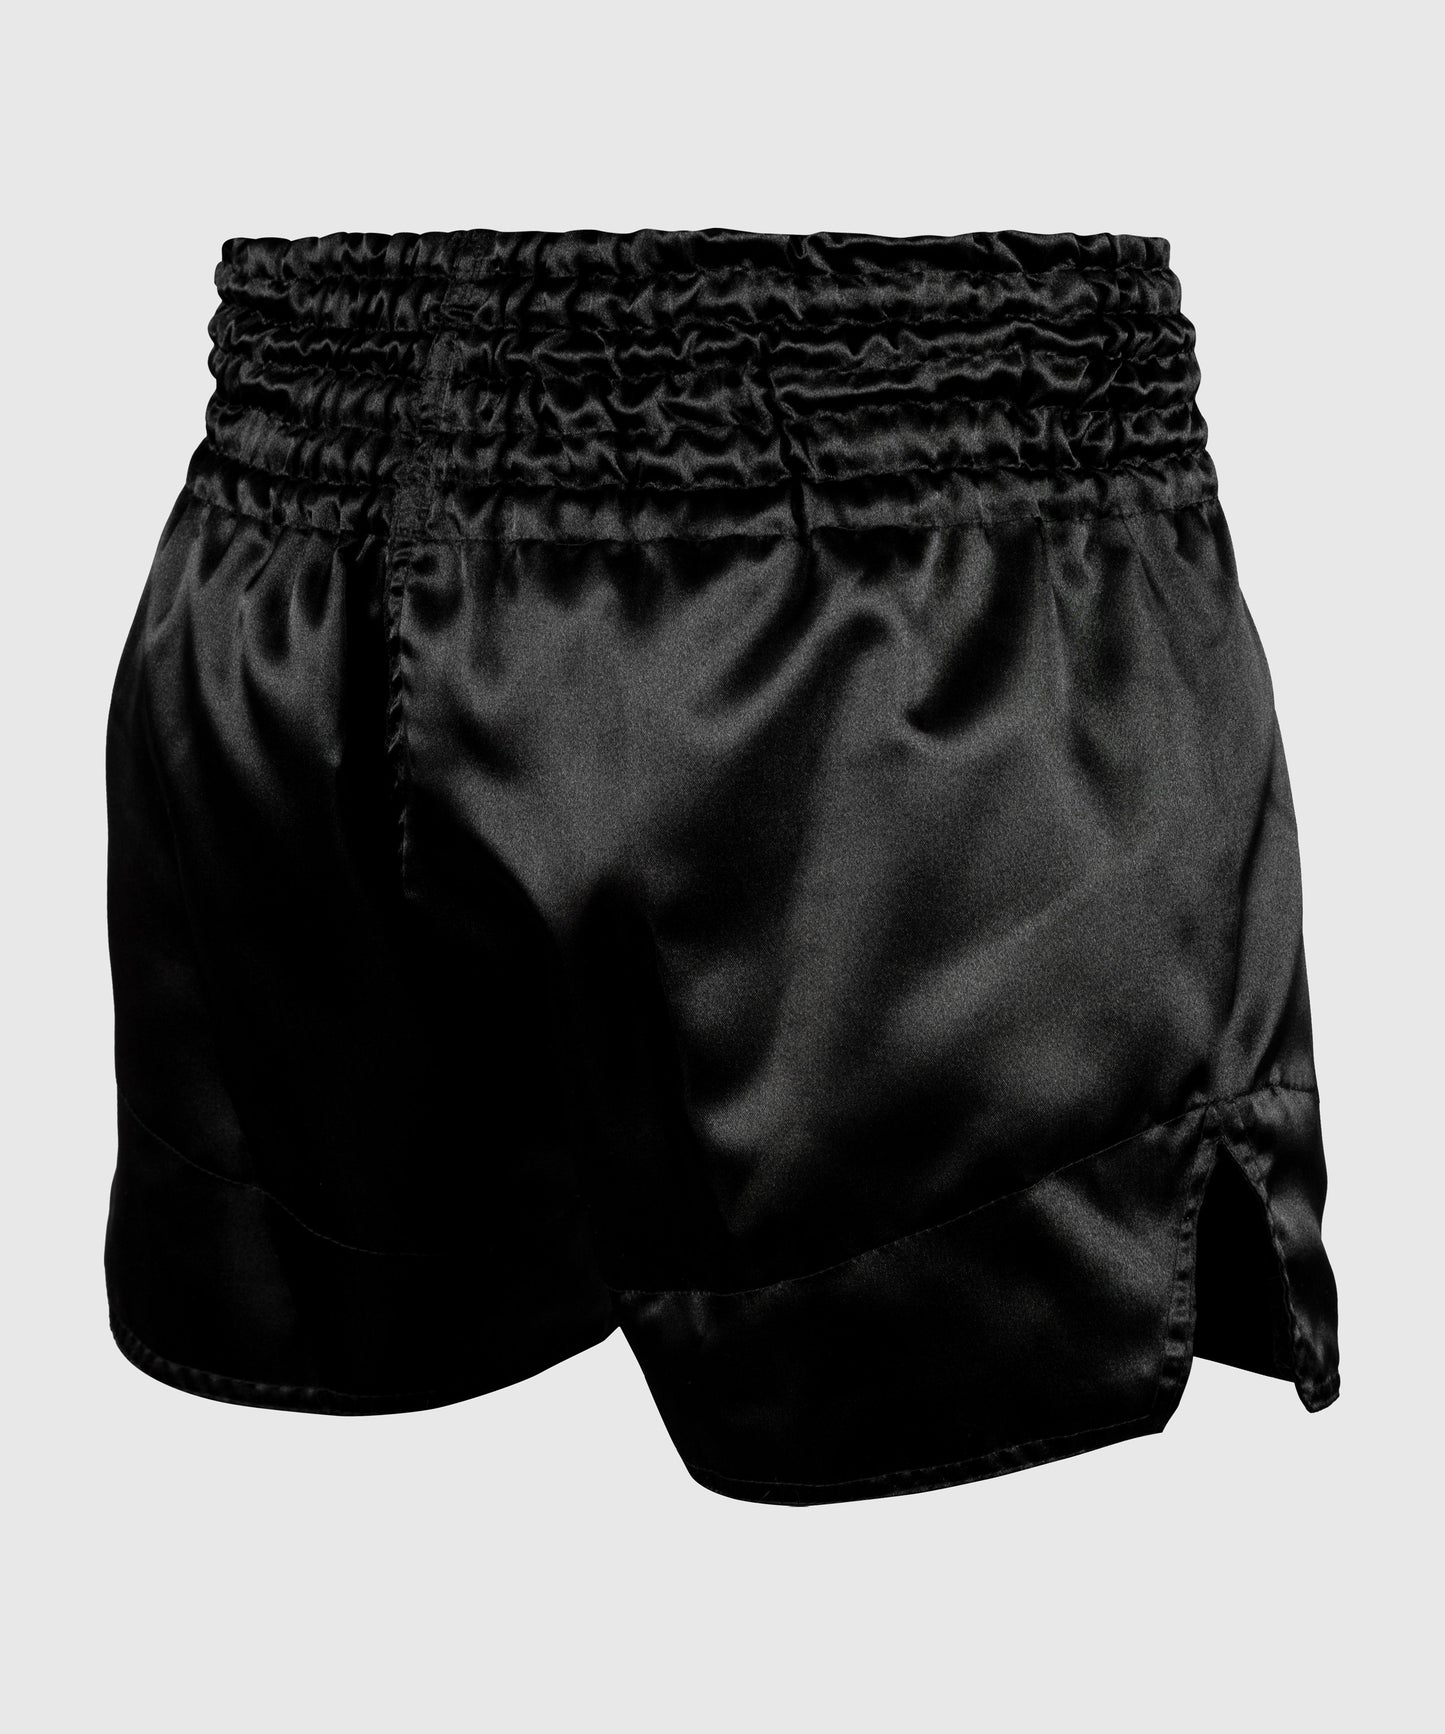 Venum Muay Thai Shorts Classic - Zwart/Rood